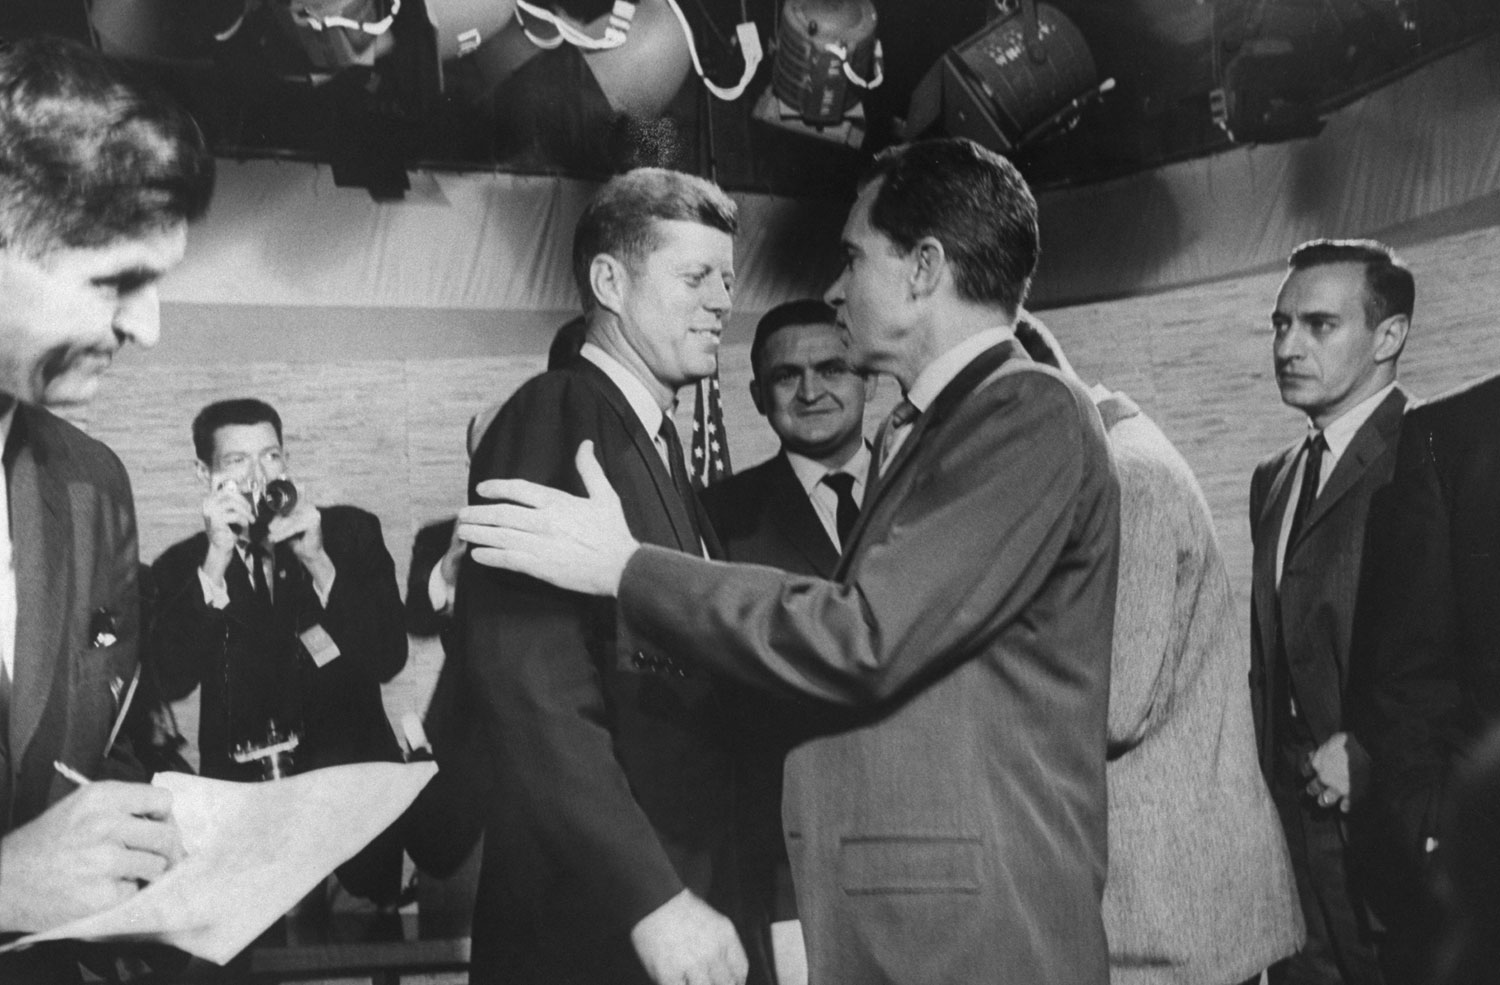 Photo of JFK and Nixon made during the Kennedy-Nixon debates, 1960.